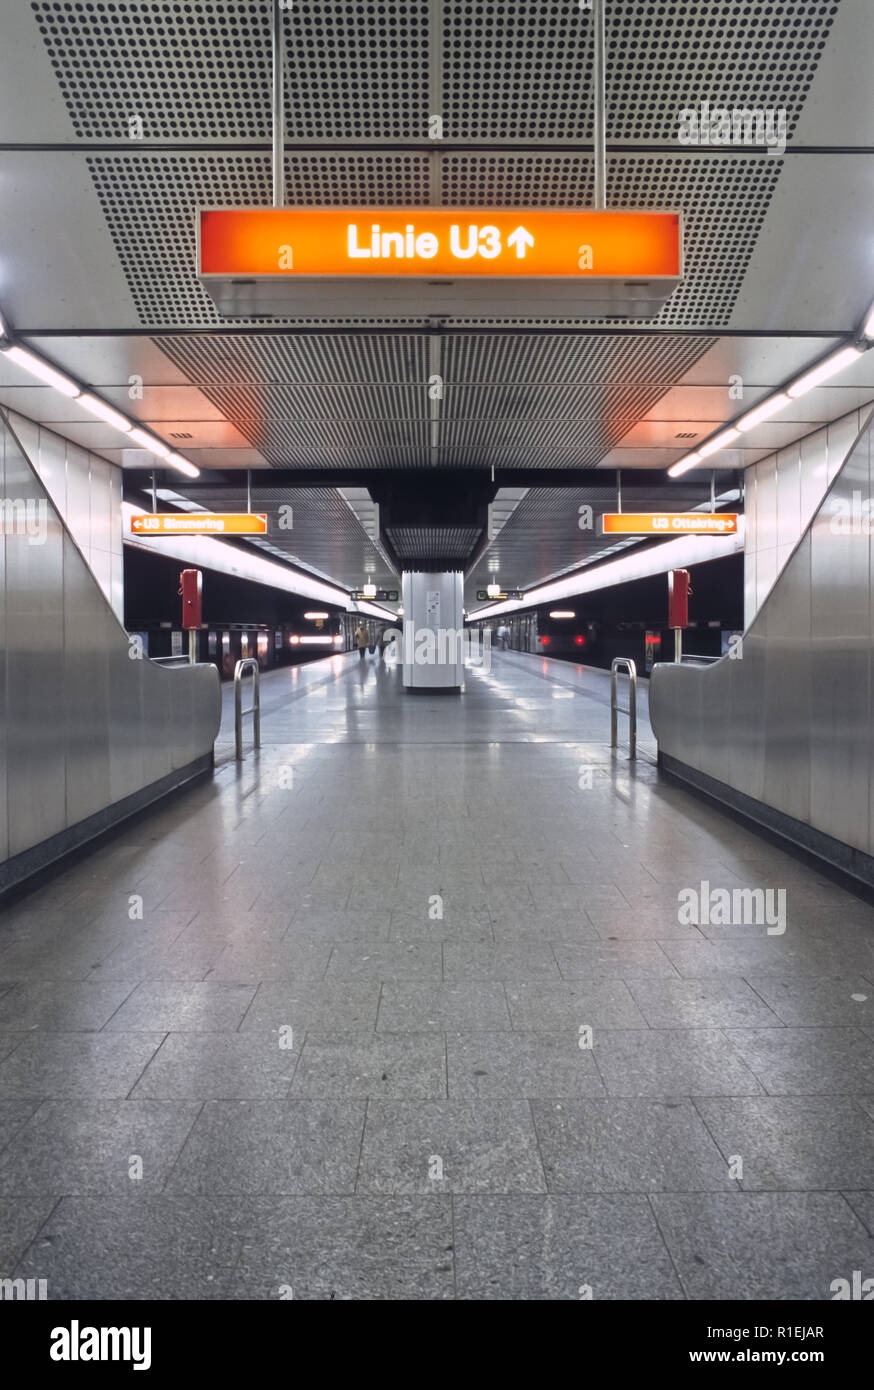 Wien, U-Bahn, U3 - Wien, U-Bahn Linie U3 Stockfotografie - Alamy